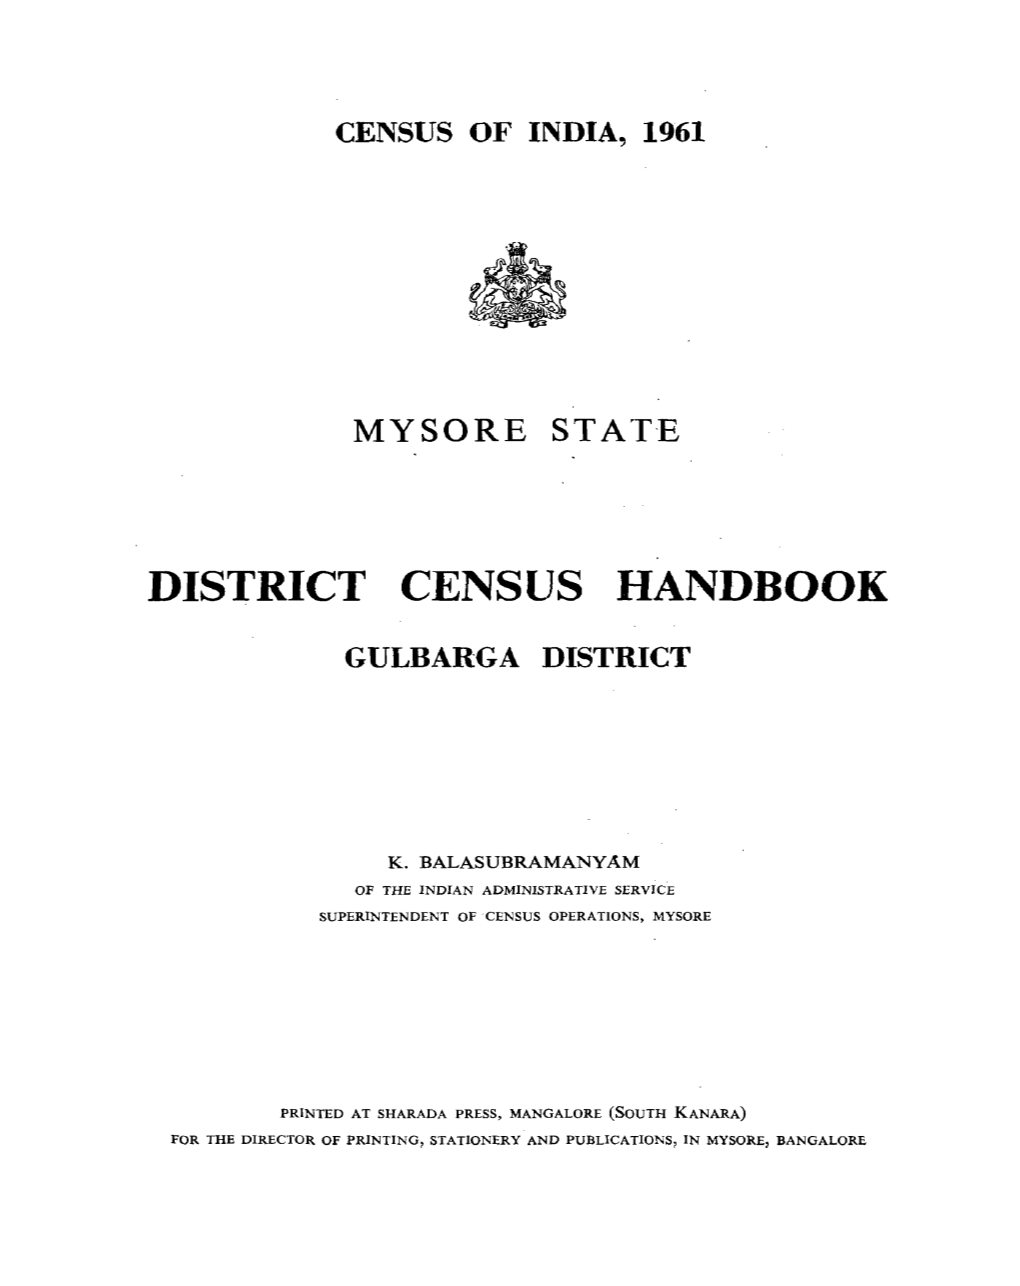 District Census Handbook, Gulbarga